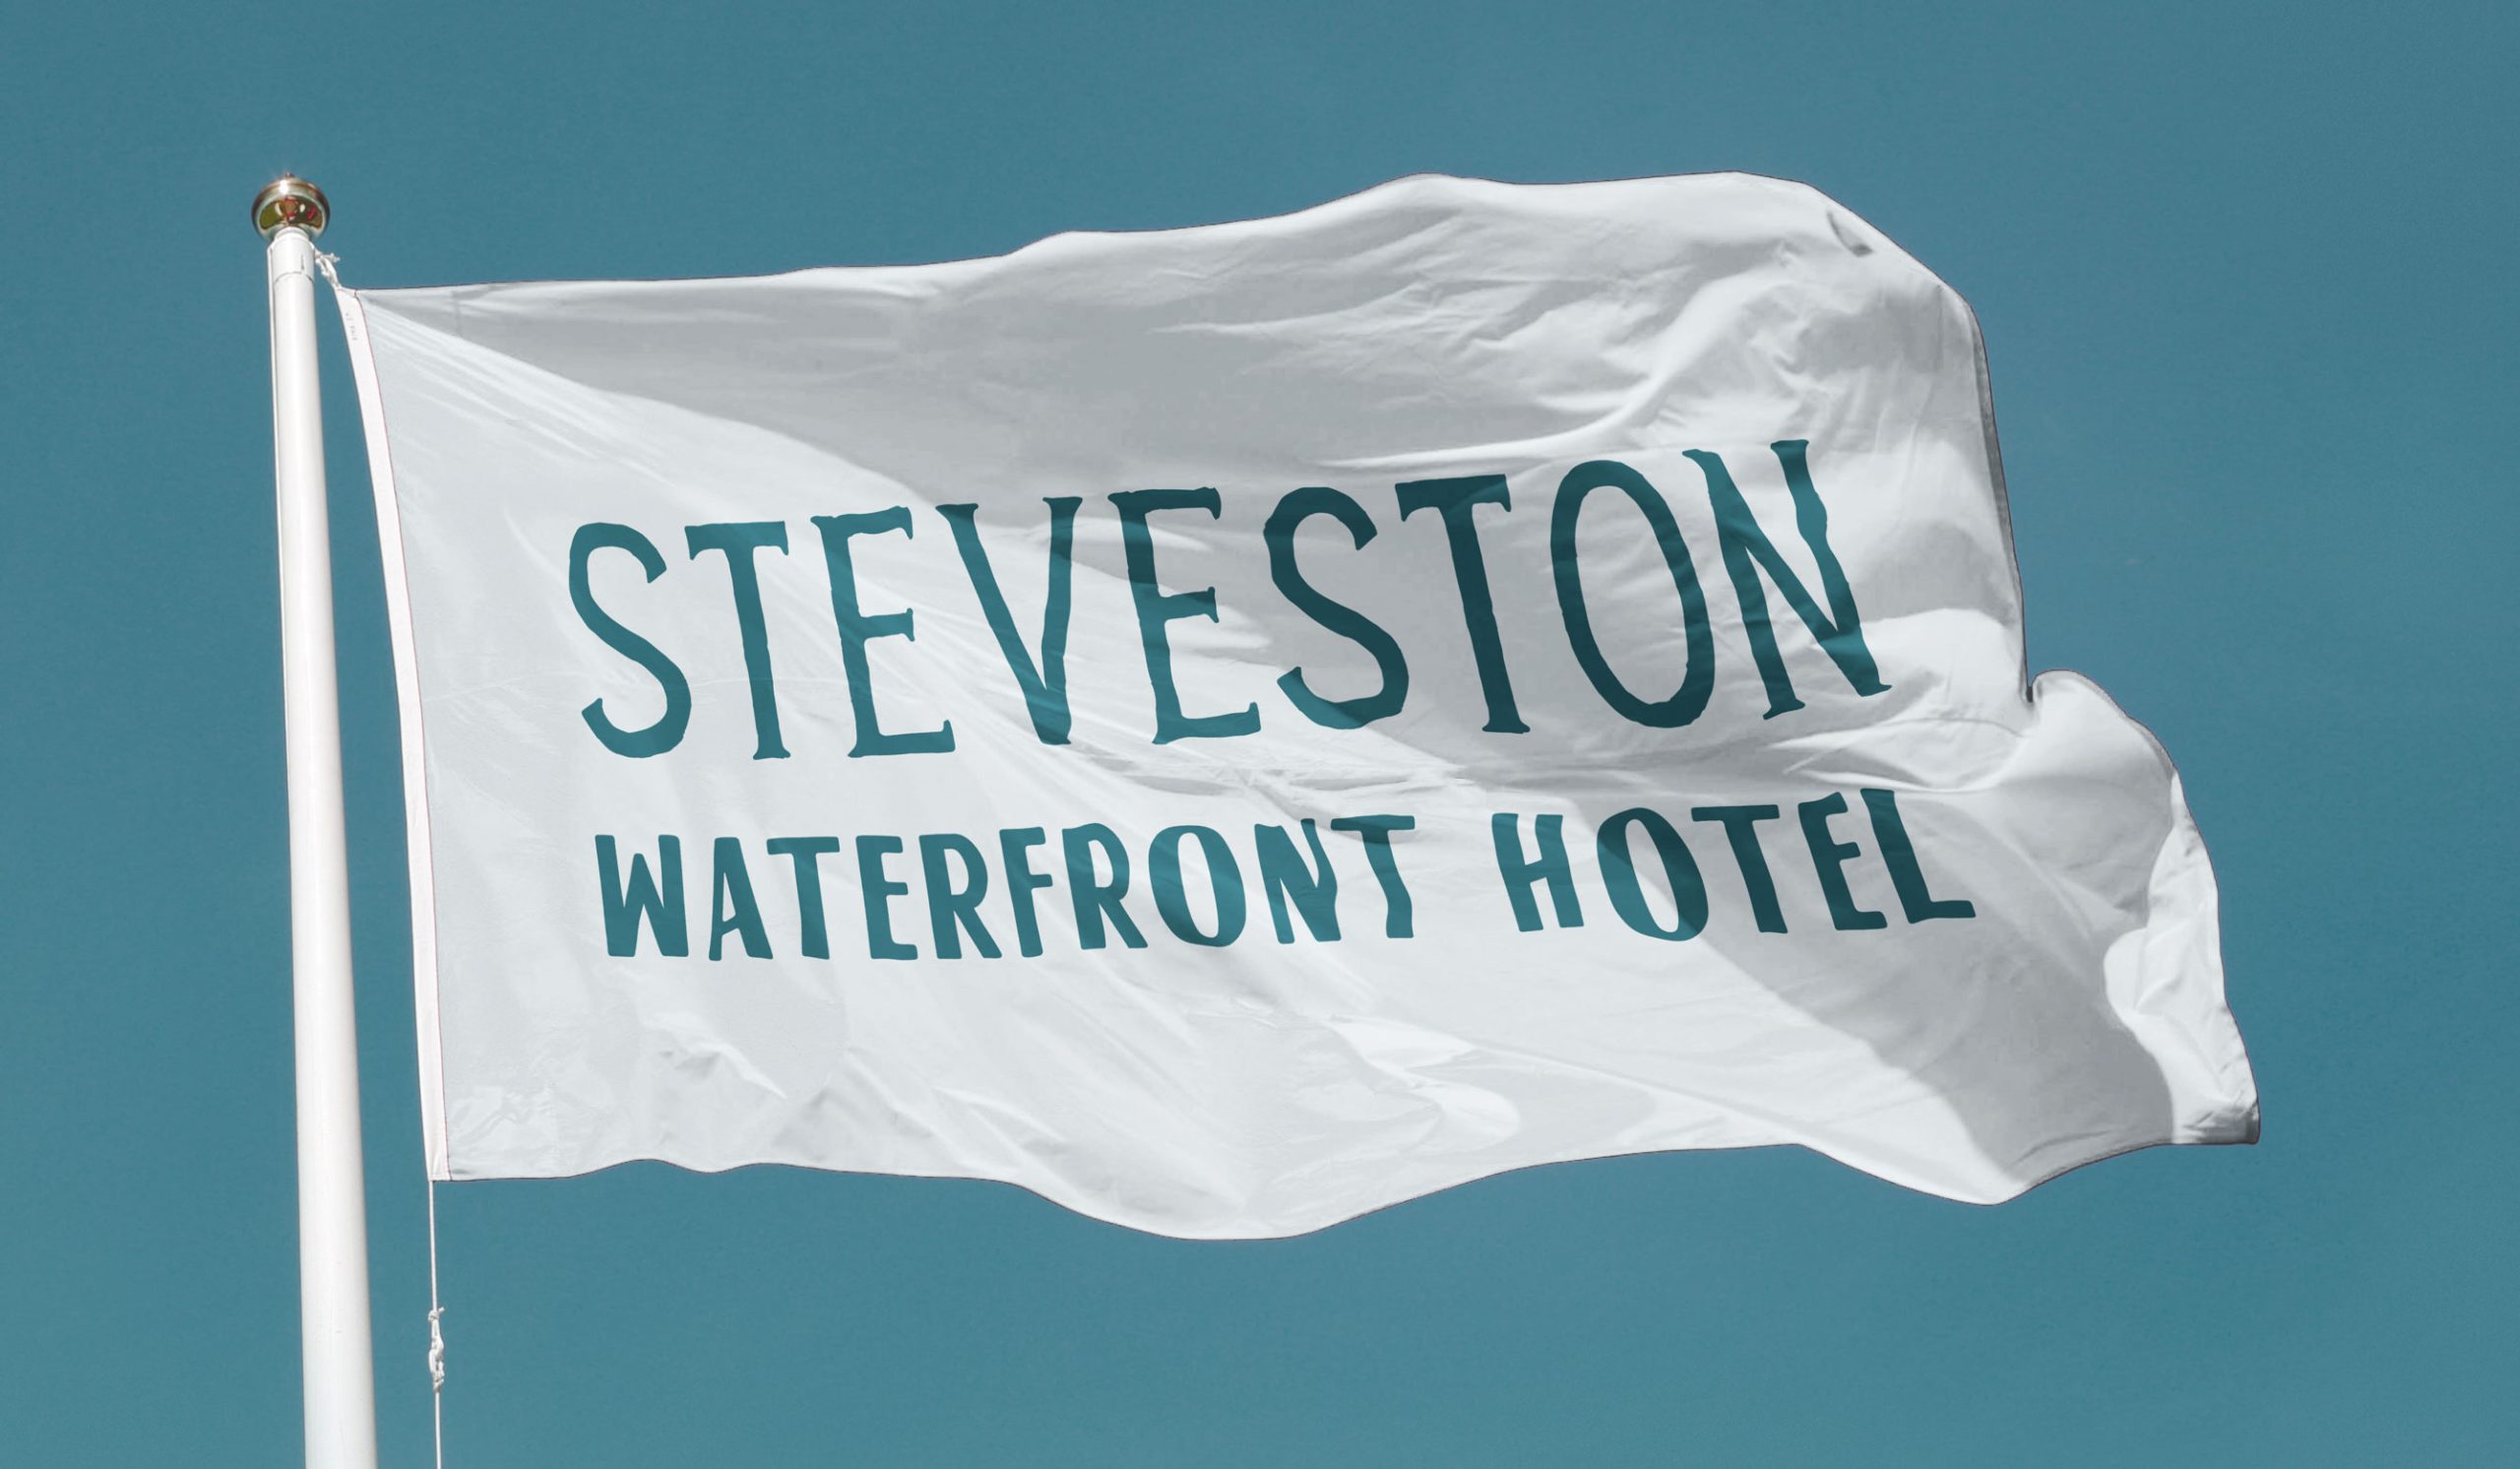 Steveston Waterfront Hotel